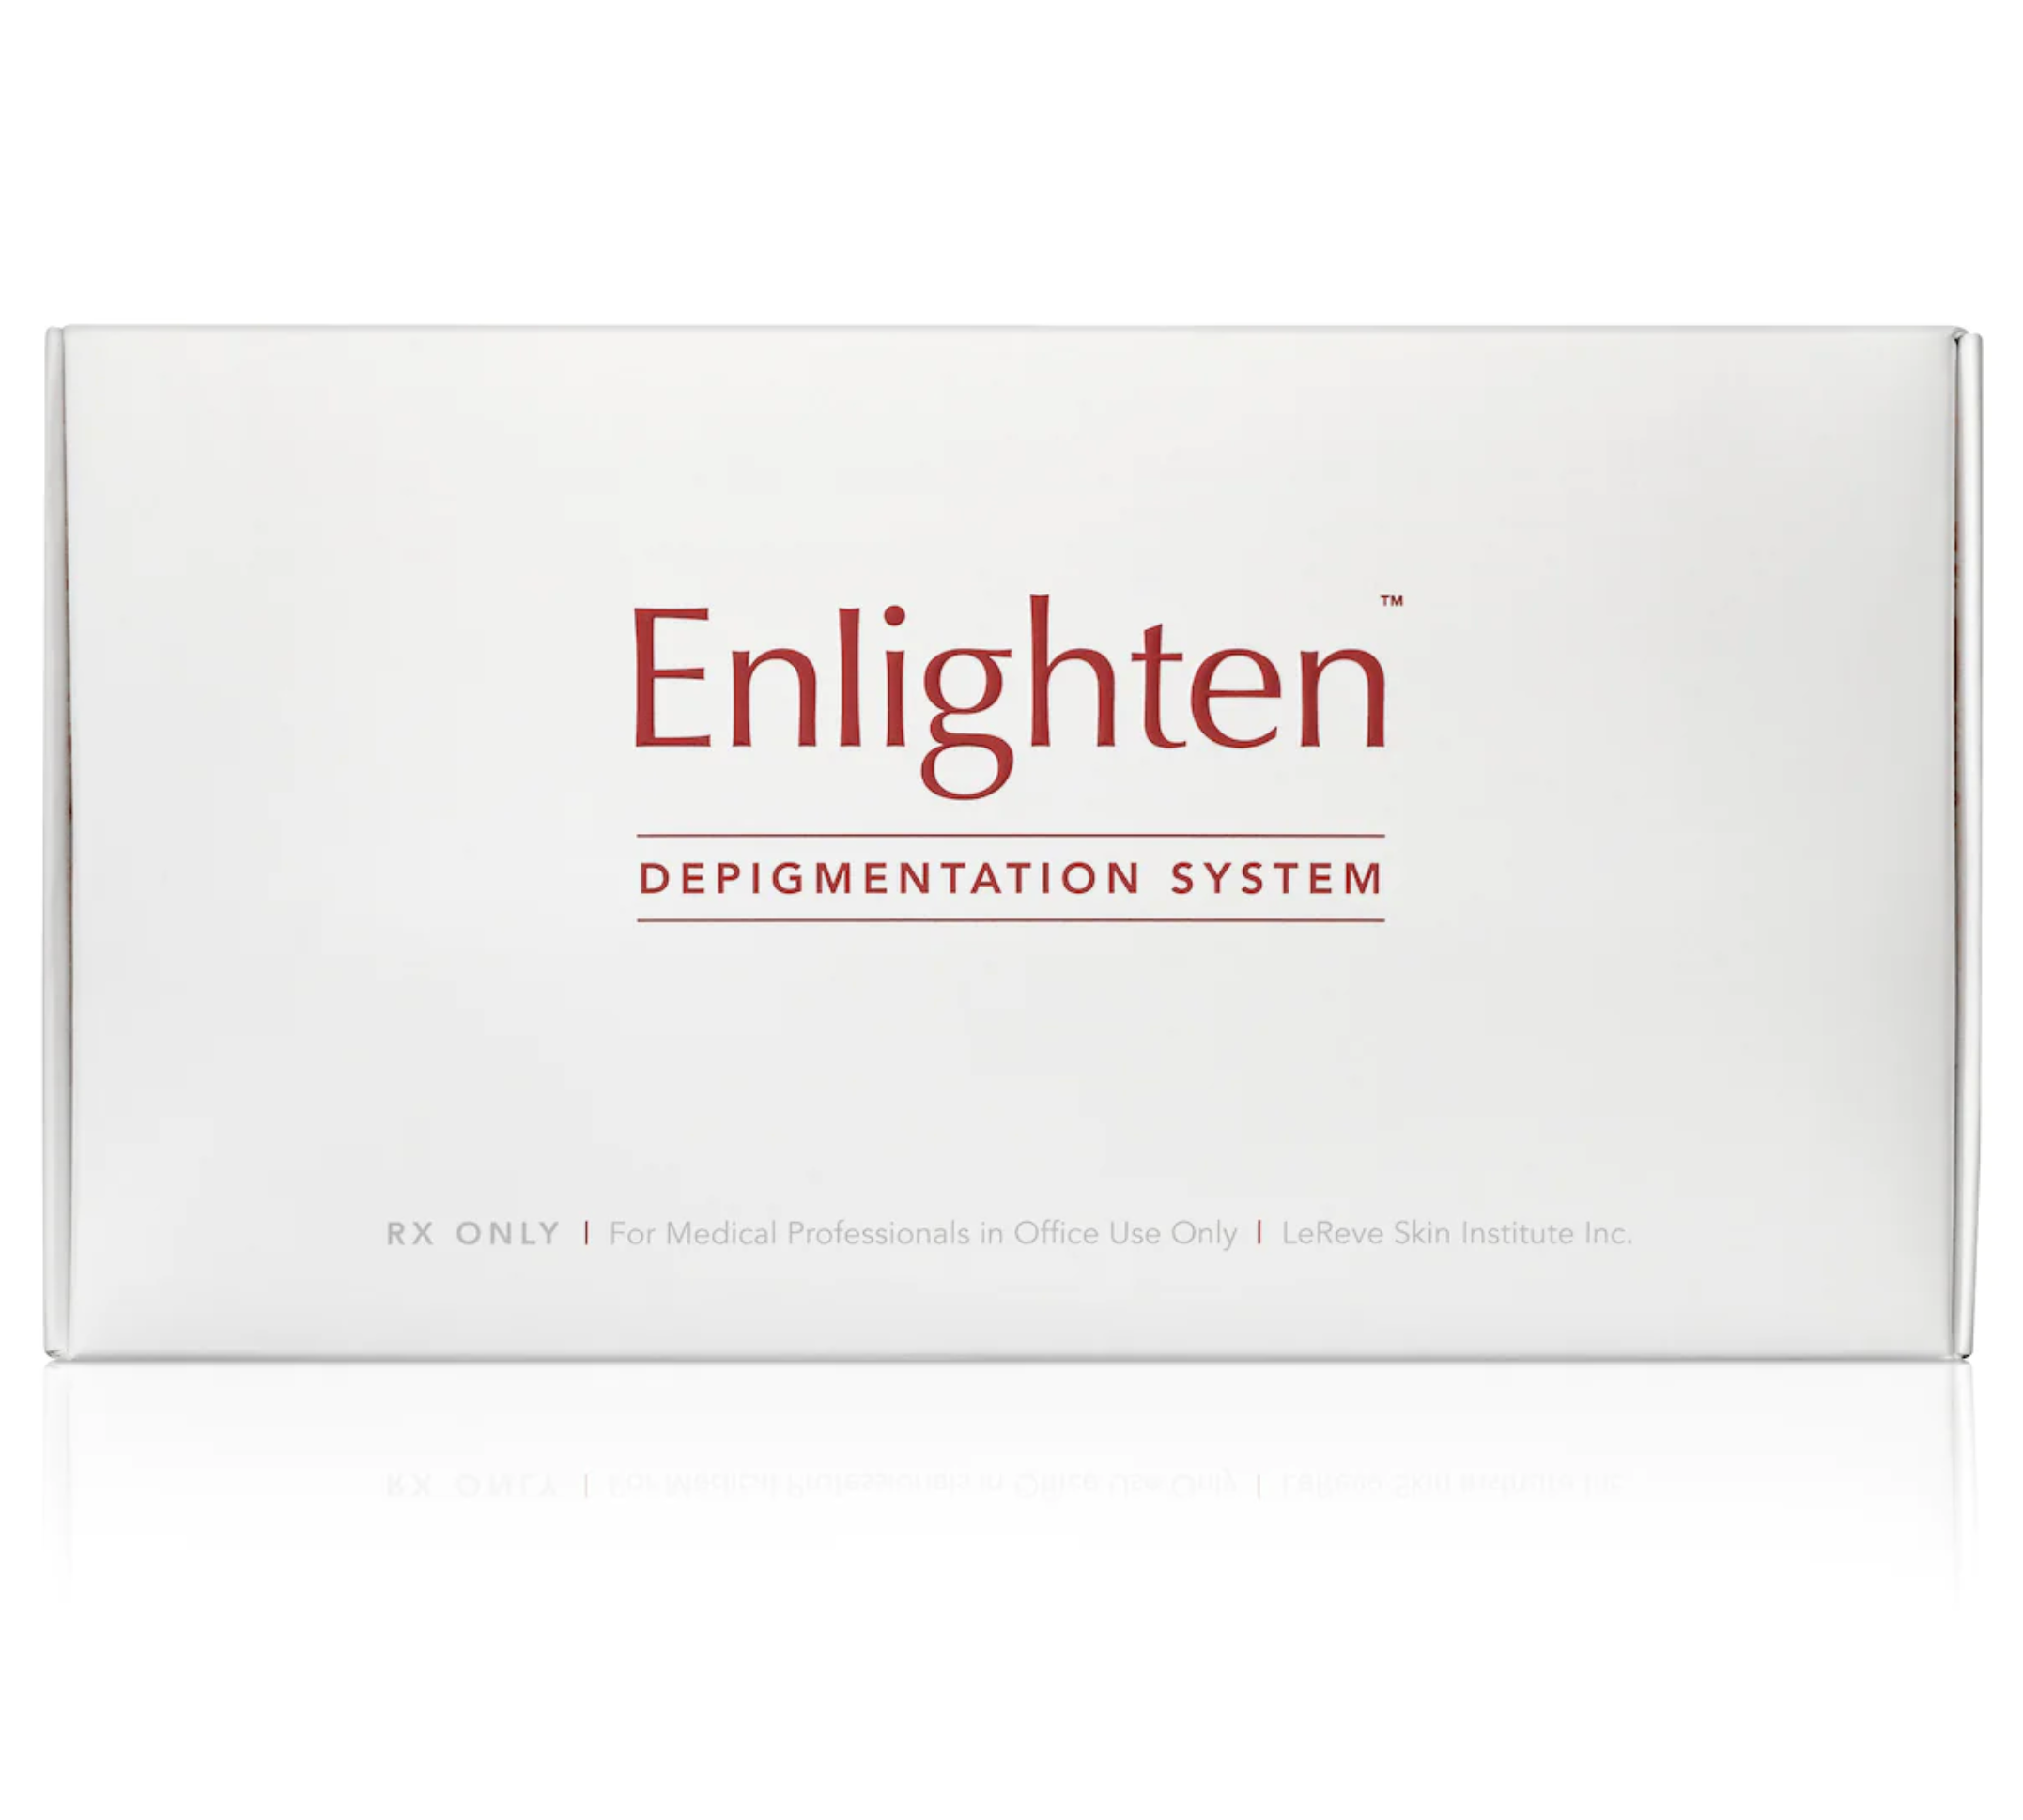 ReveSkin enlighten depigmentation system product shot